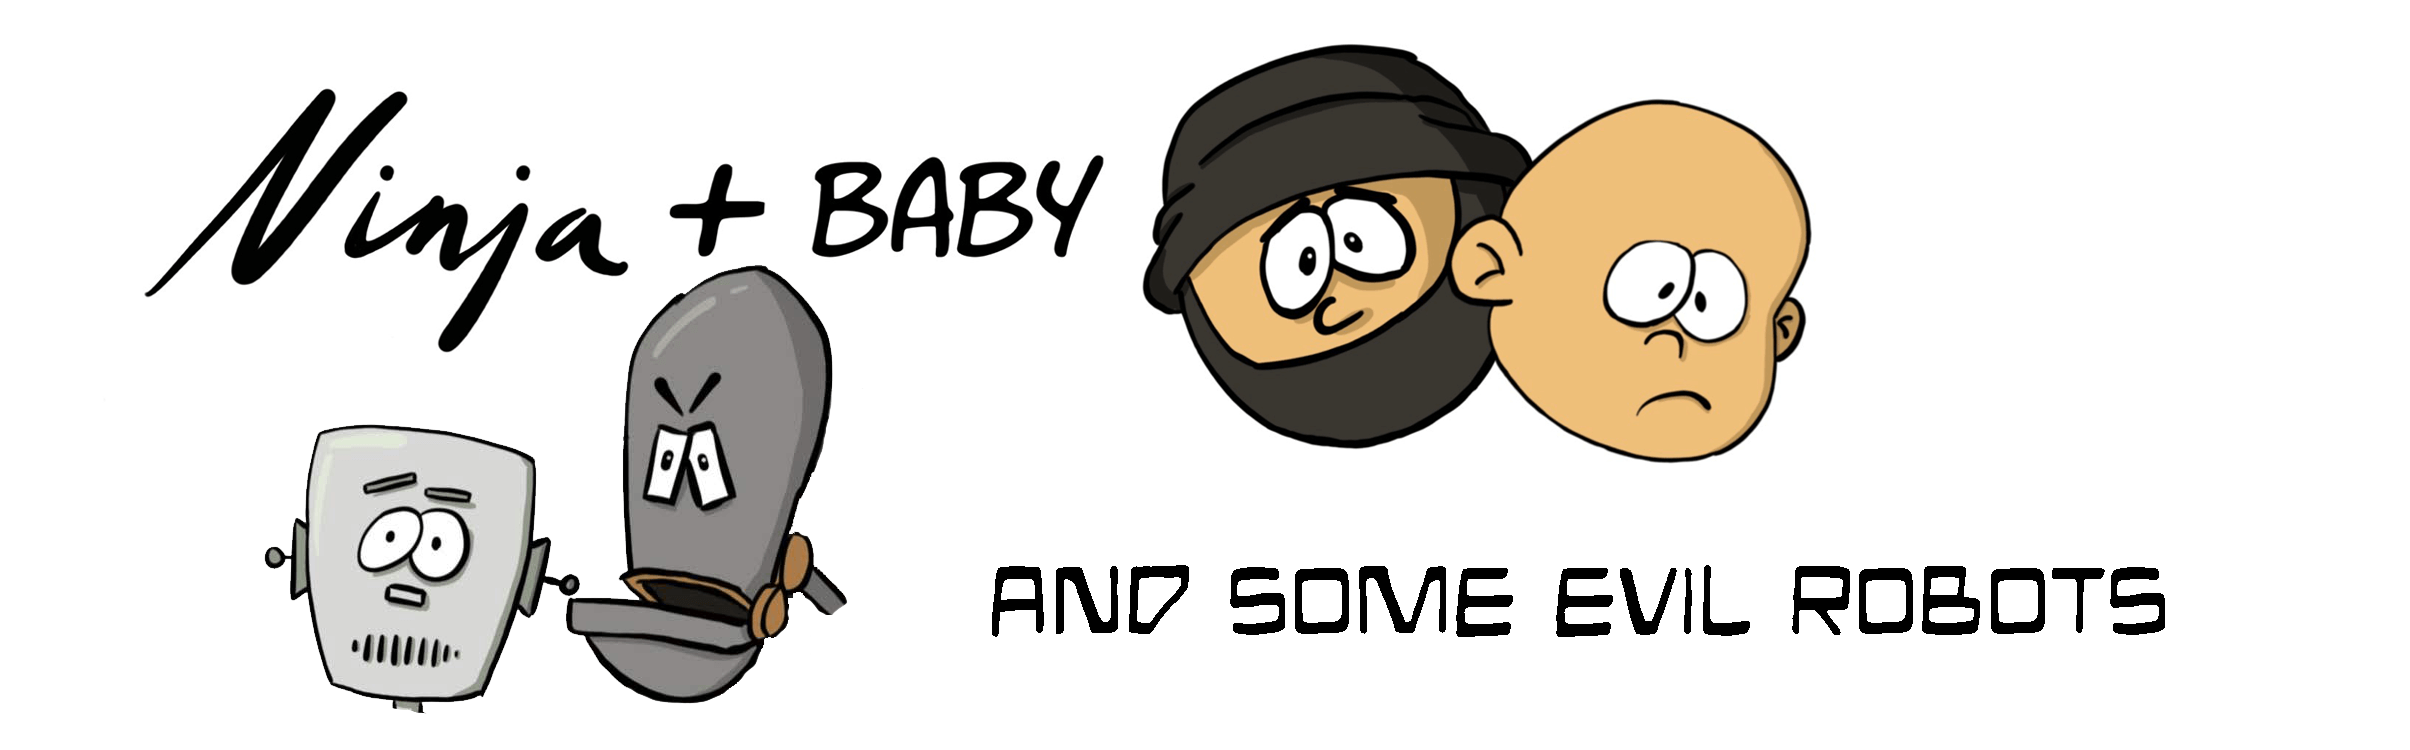 Ninja and Baby and some evil robots